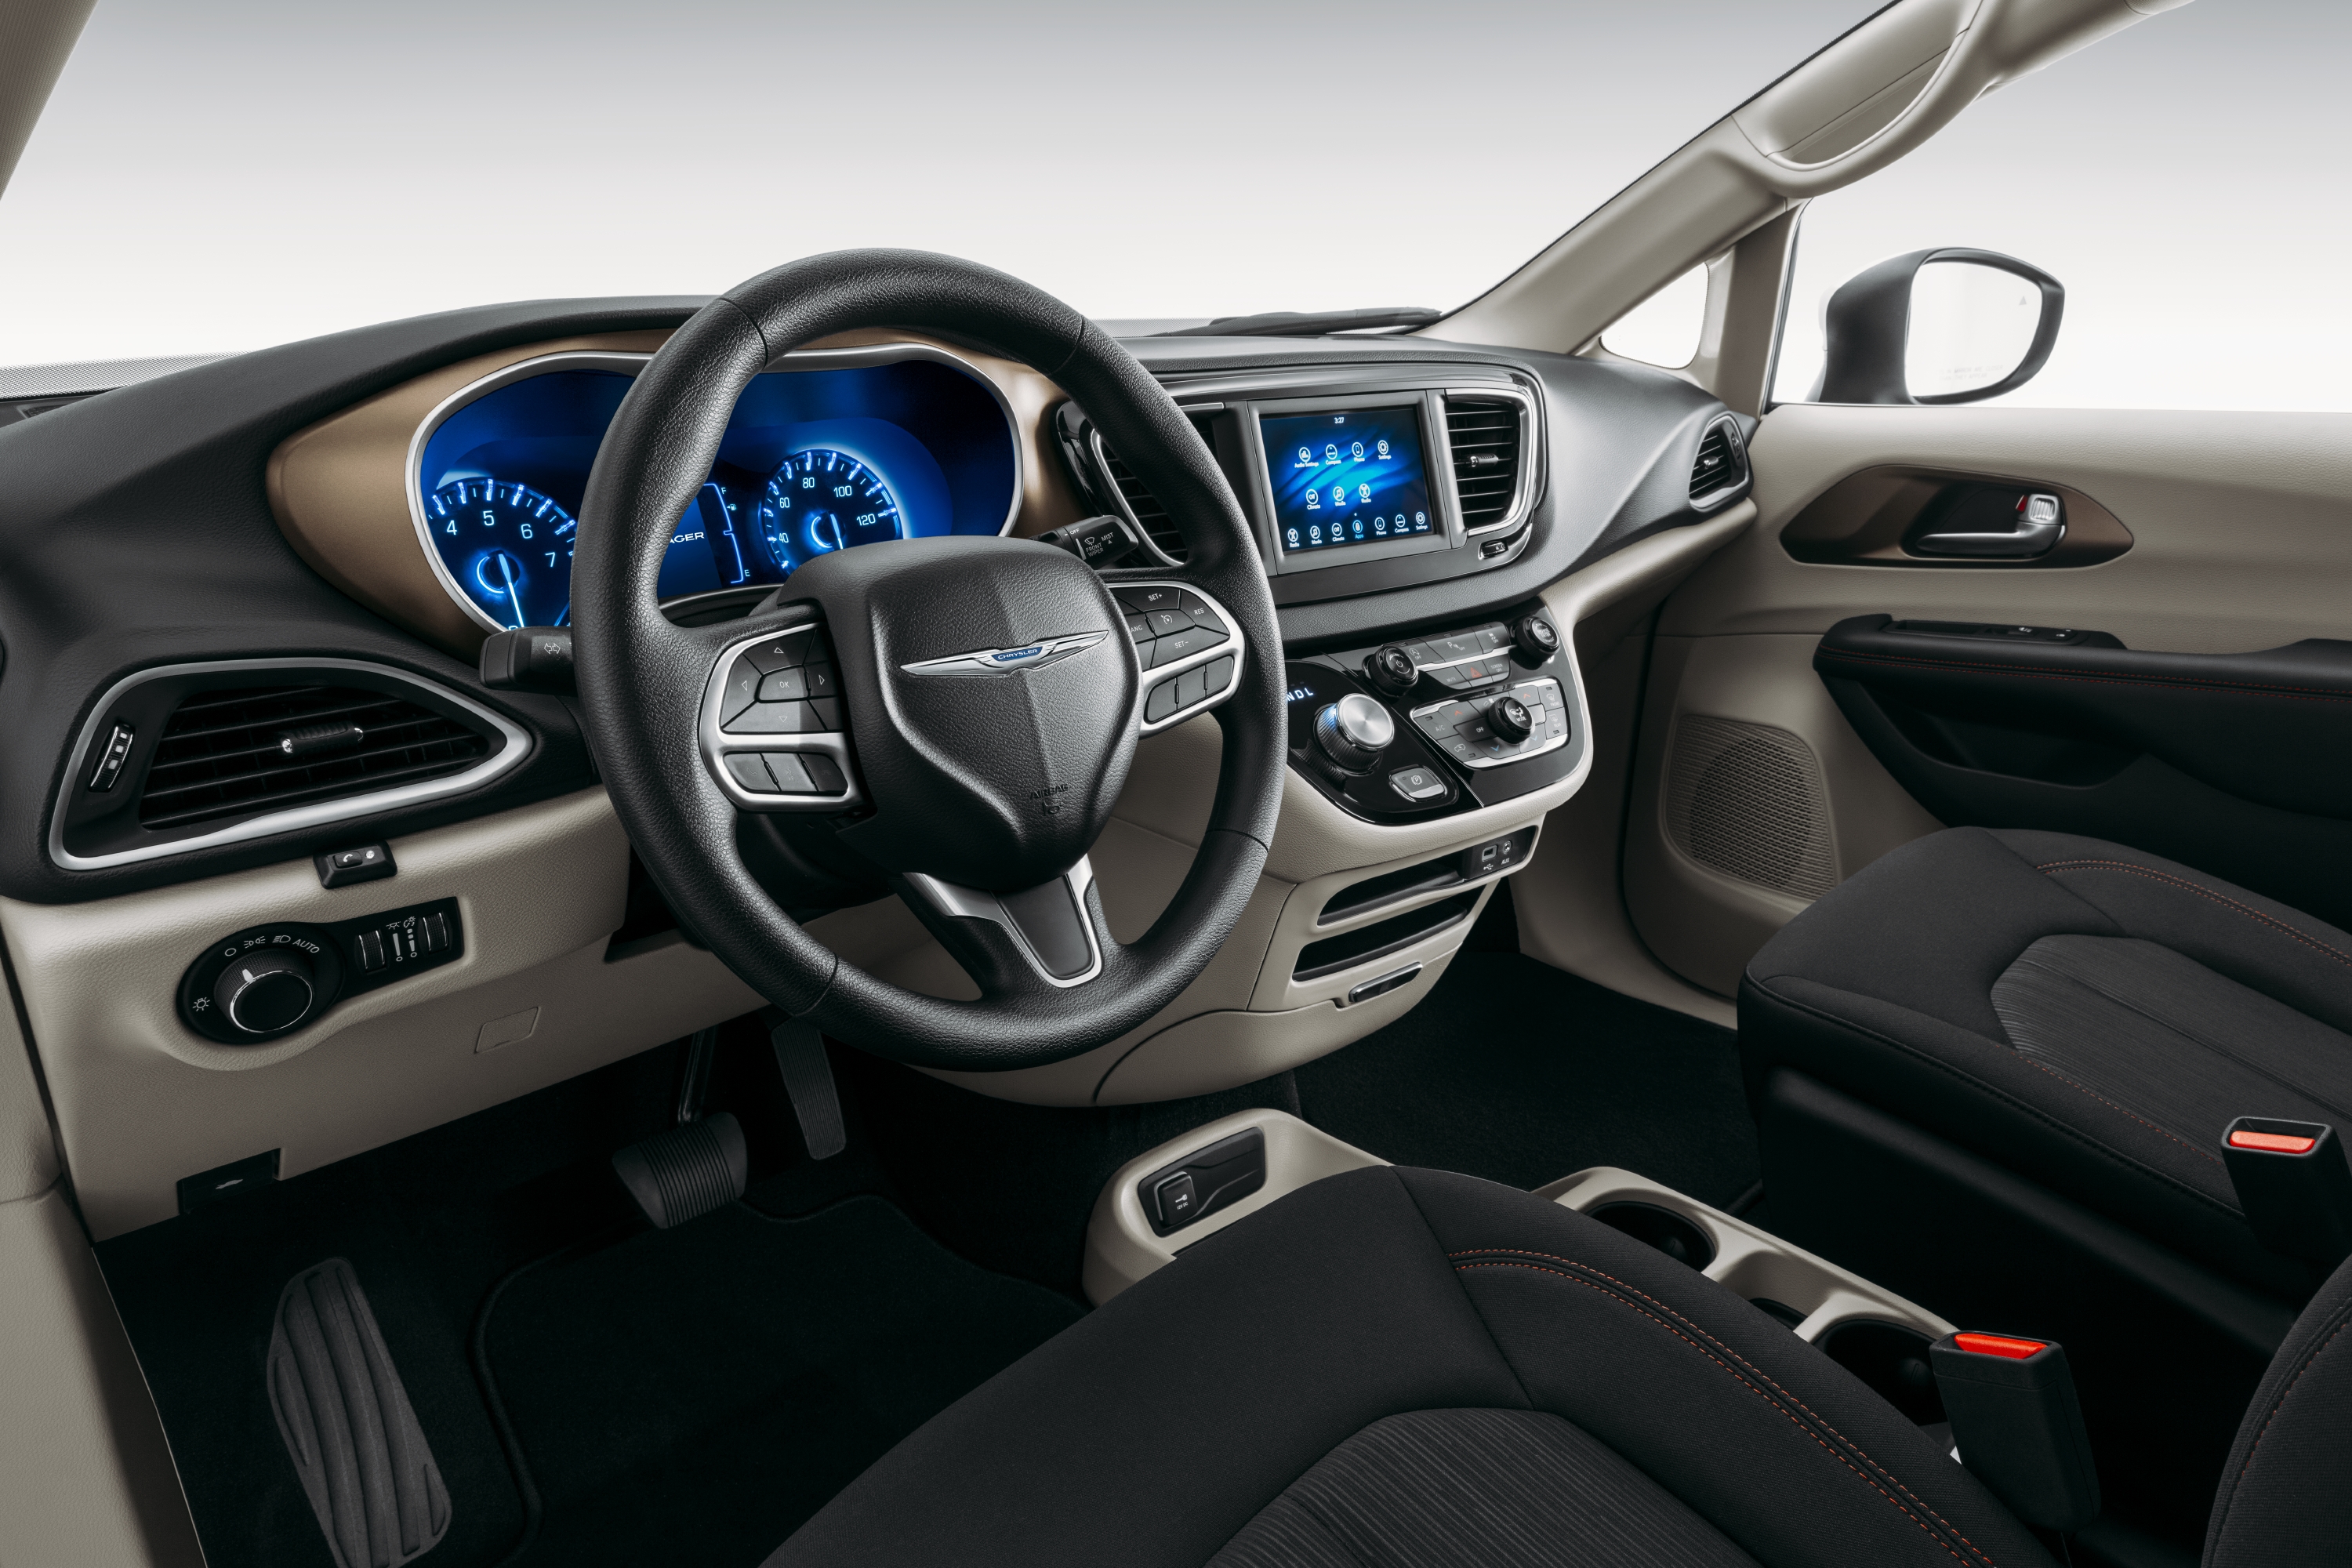 2020 Chrysler Voyager IP wide.jpg